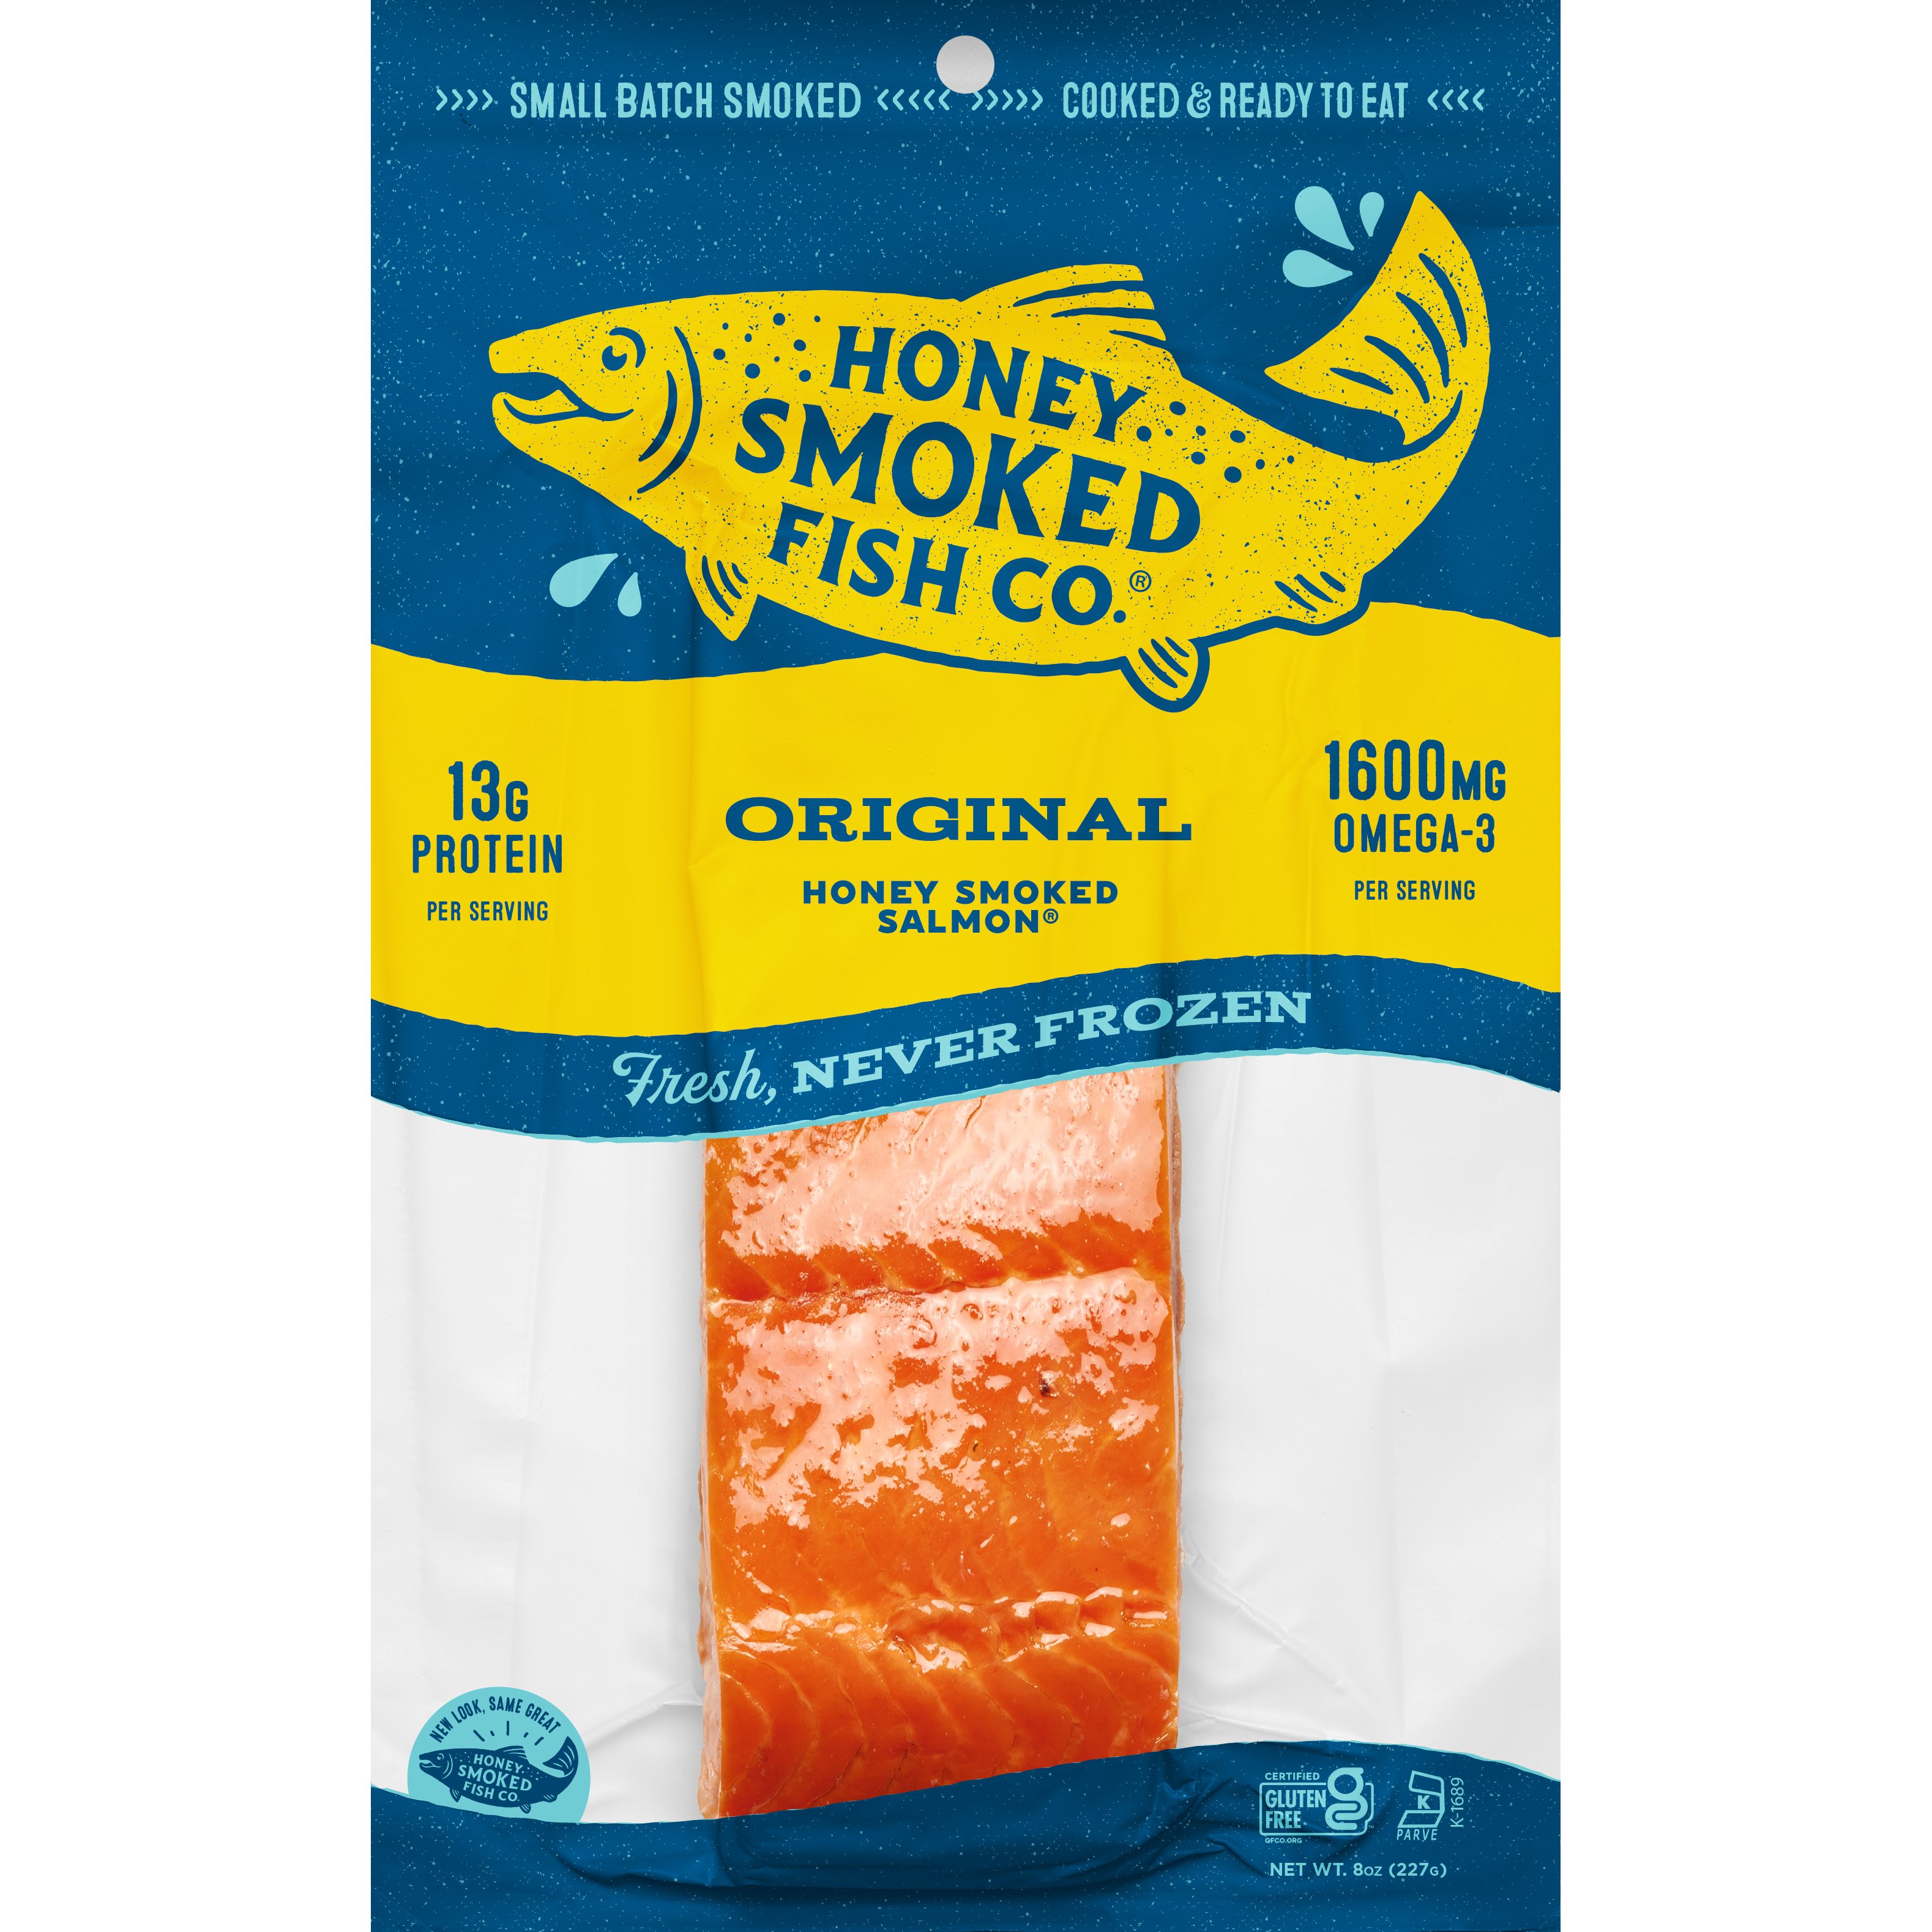 Honey Smoked Fish Co. Honey Smoked Salmon - Original - Shop Fish at H-E-B